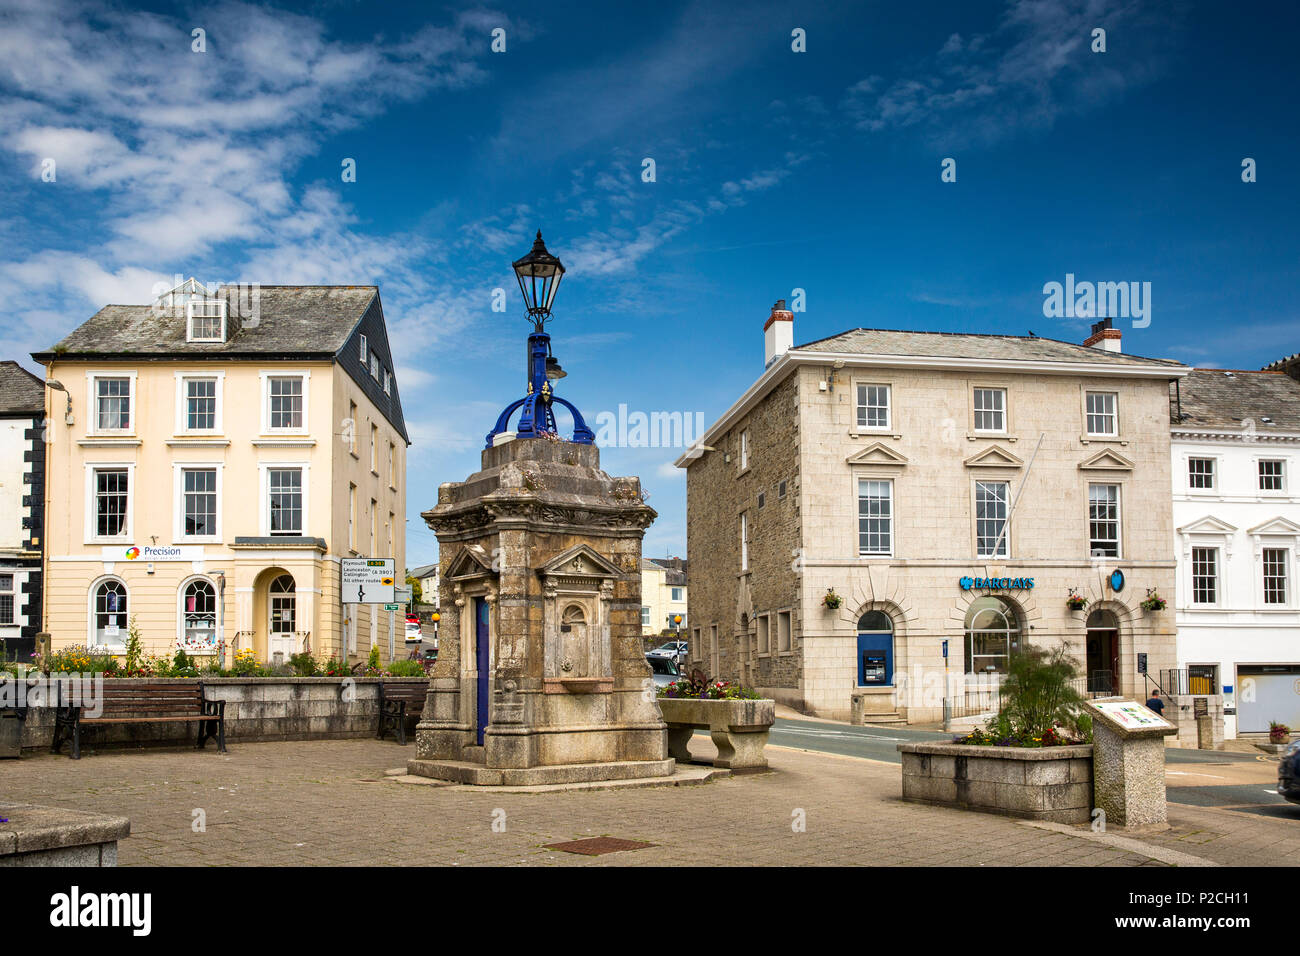 UK, Cornwall, Liskeard, The Parade, 1871 fountain, designed by local architect Henry Rice Stock Photo